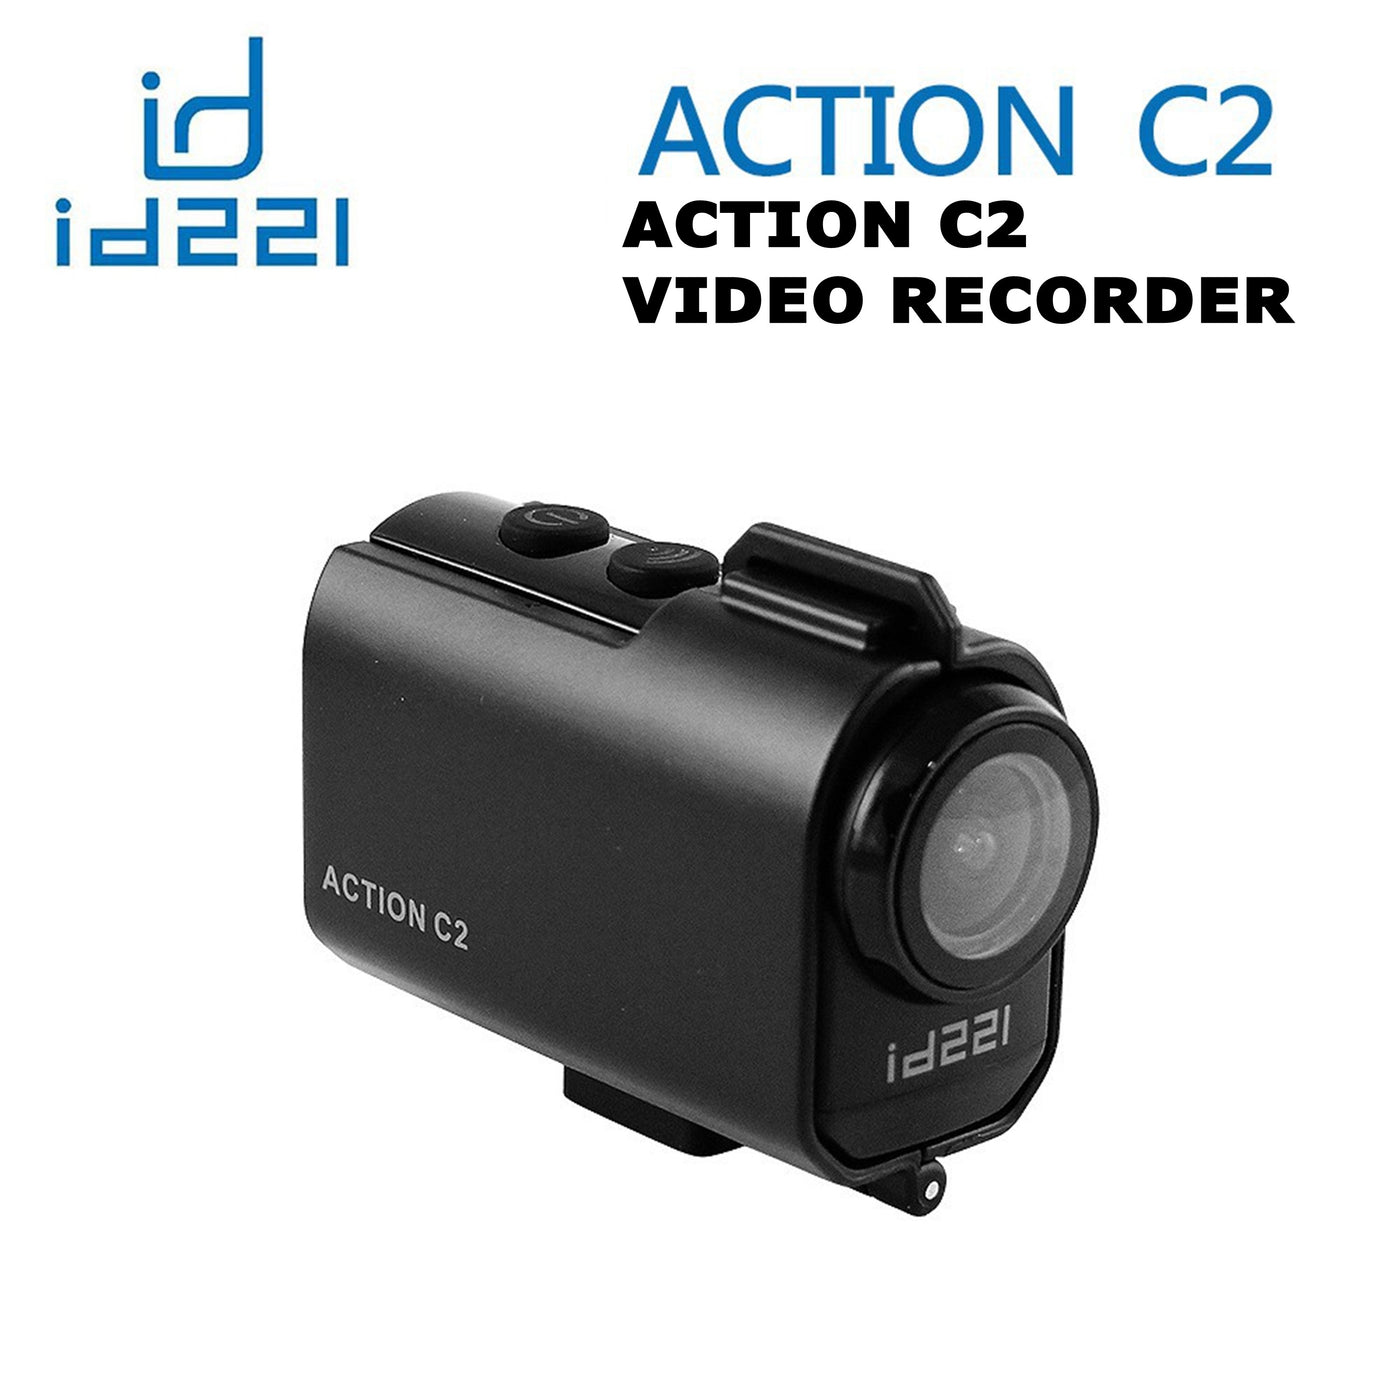 id221 Action C2 Video Recorder Helmet / Handle Bar Camera